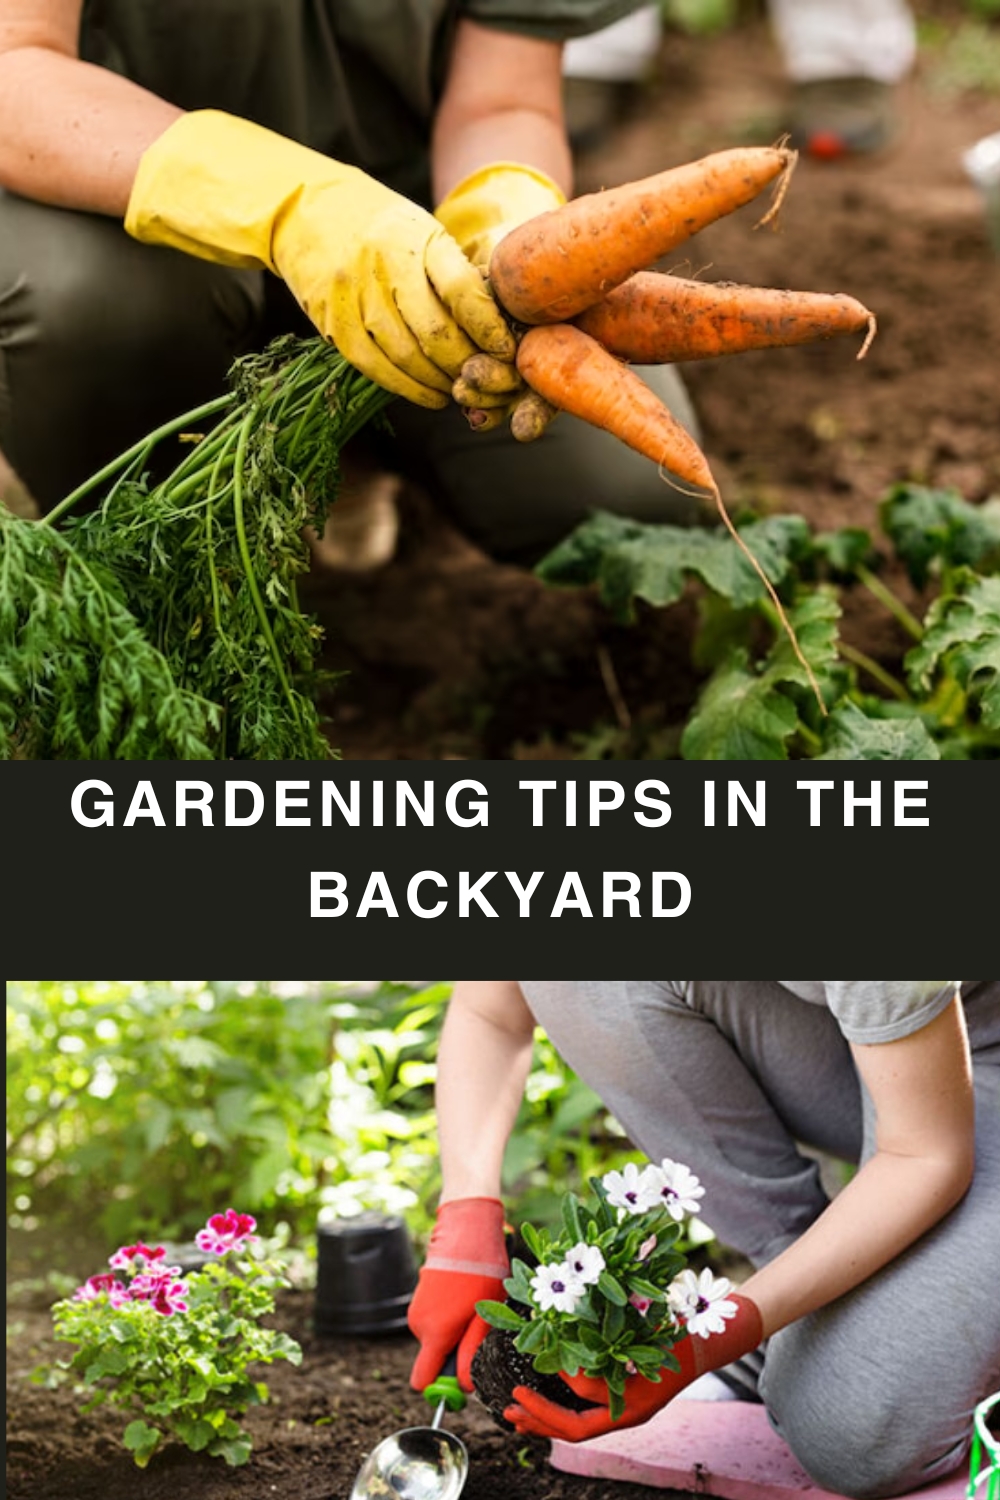 Gardening Tips in the backyard
